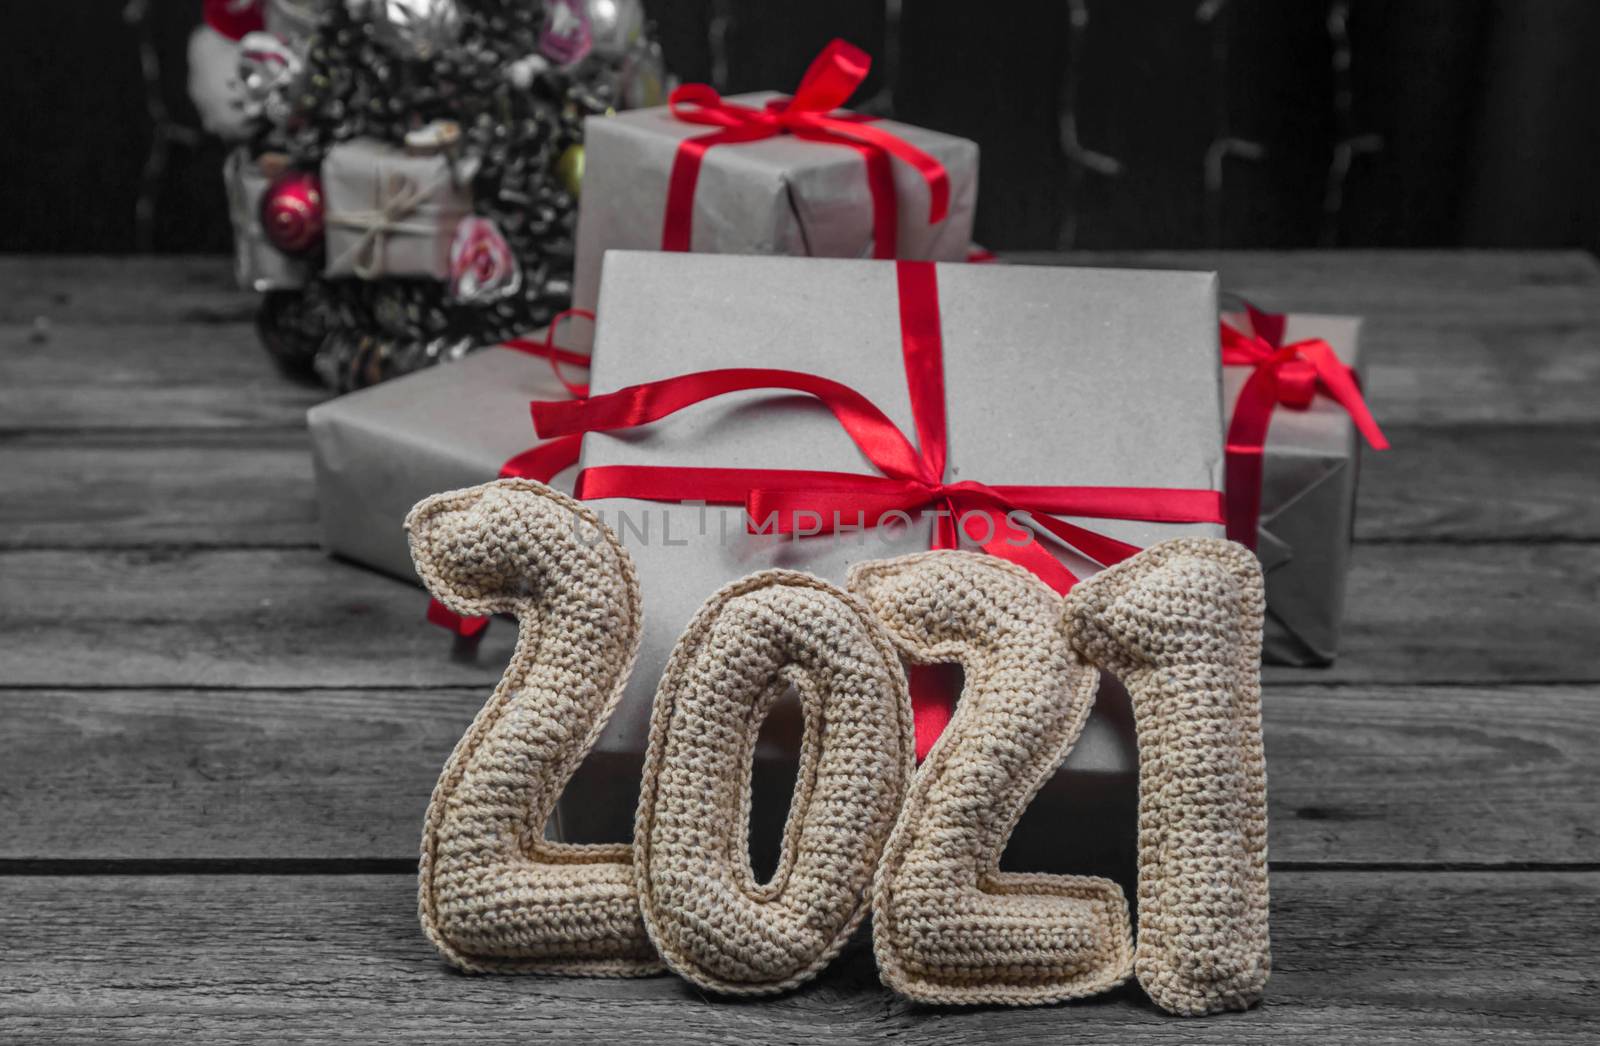 Happy chinese new year 2021 background with crocheted numbers 2021 by galinasharapova